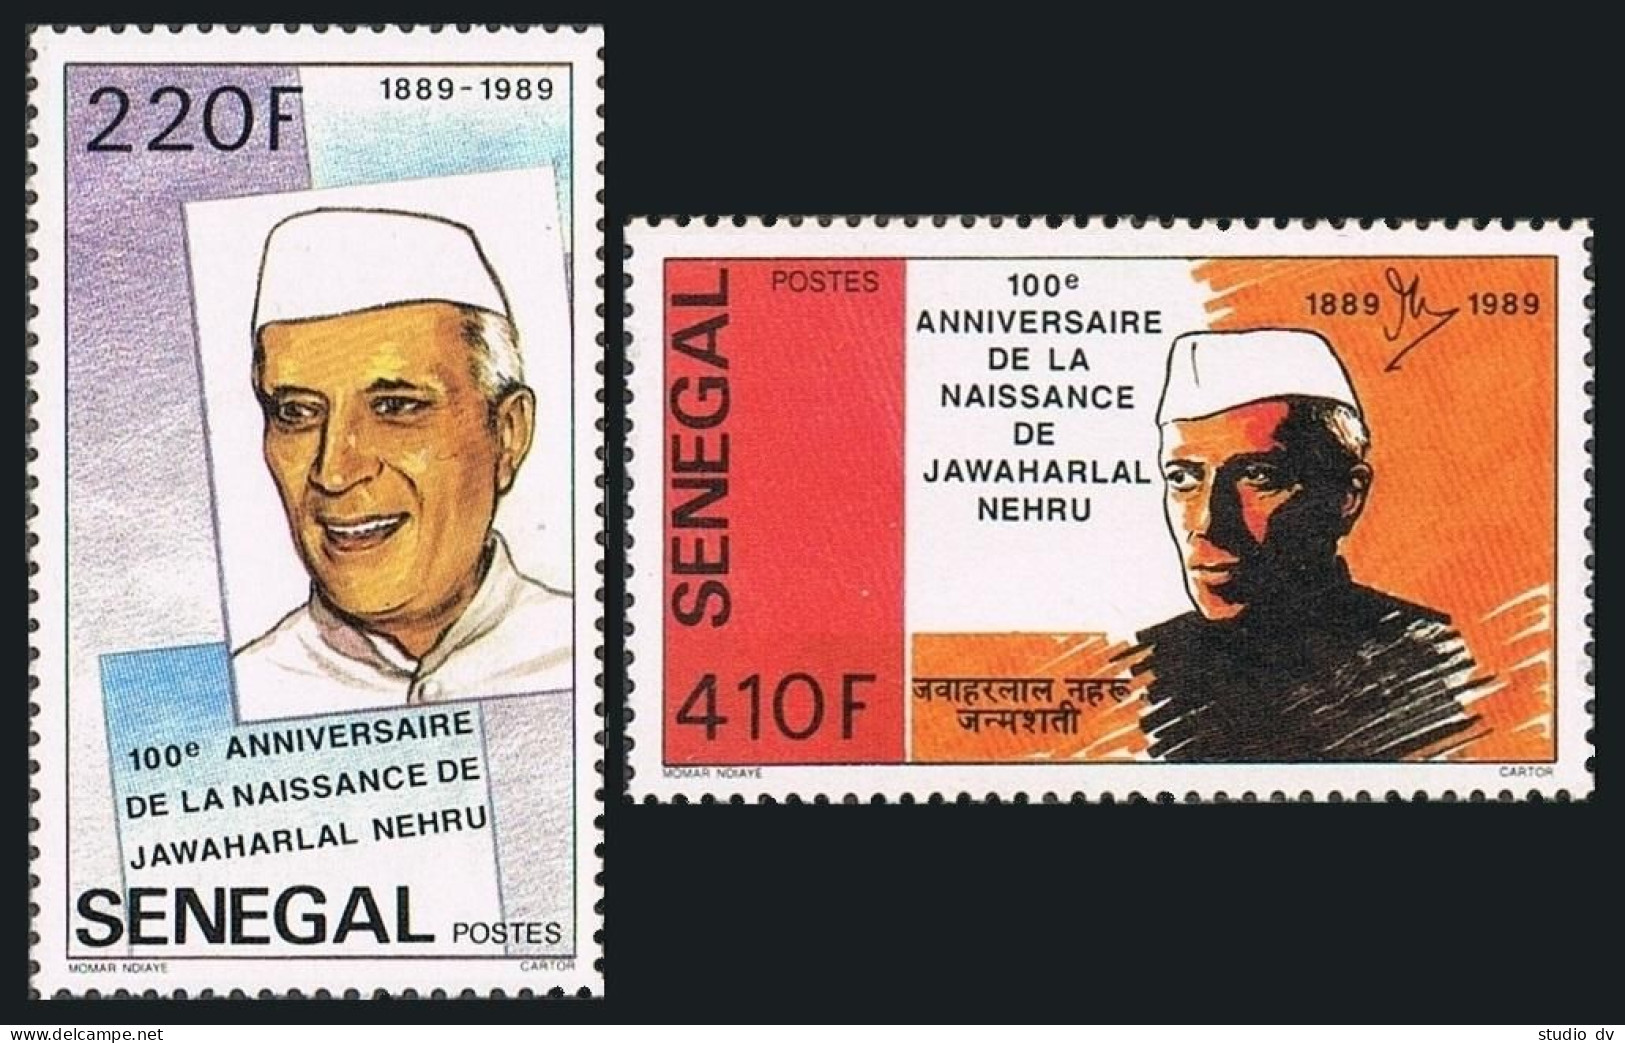 Senegal 841-842,MNH.Mi 1039-1040. Jawarharlal Nehru,1st Prime Minister Of India. - Senegal (1960-...)